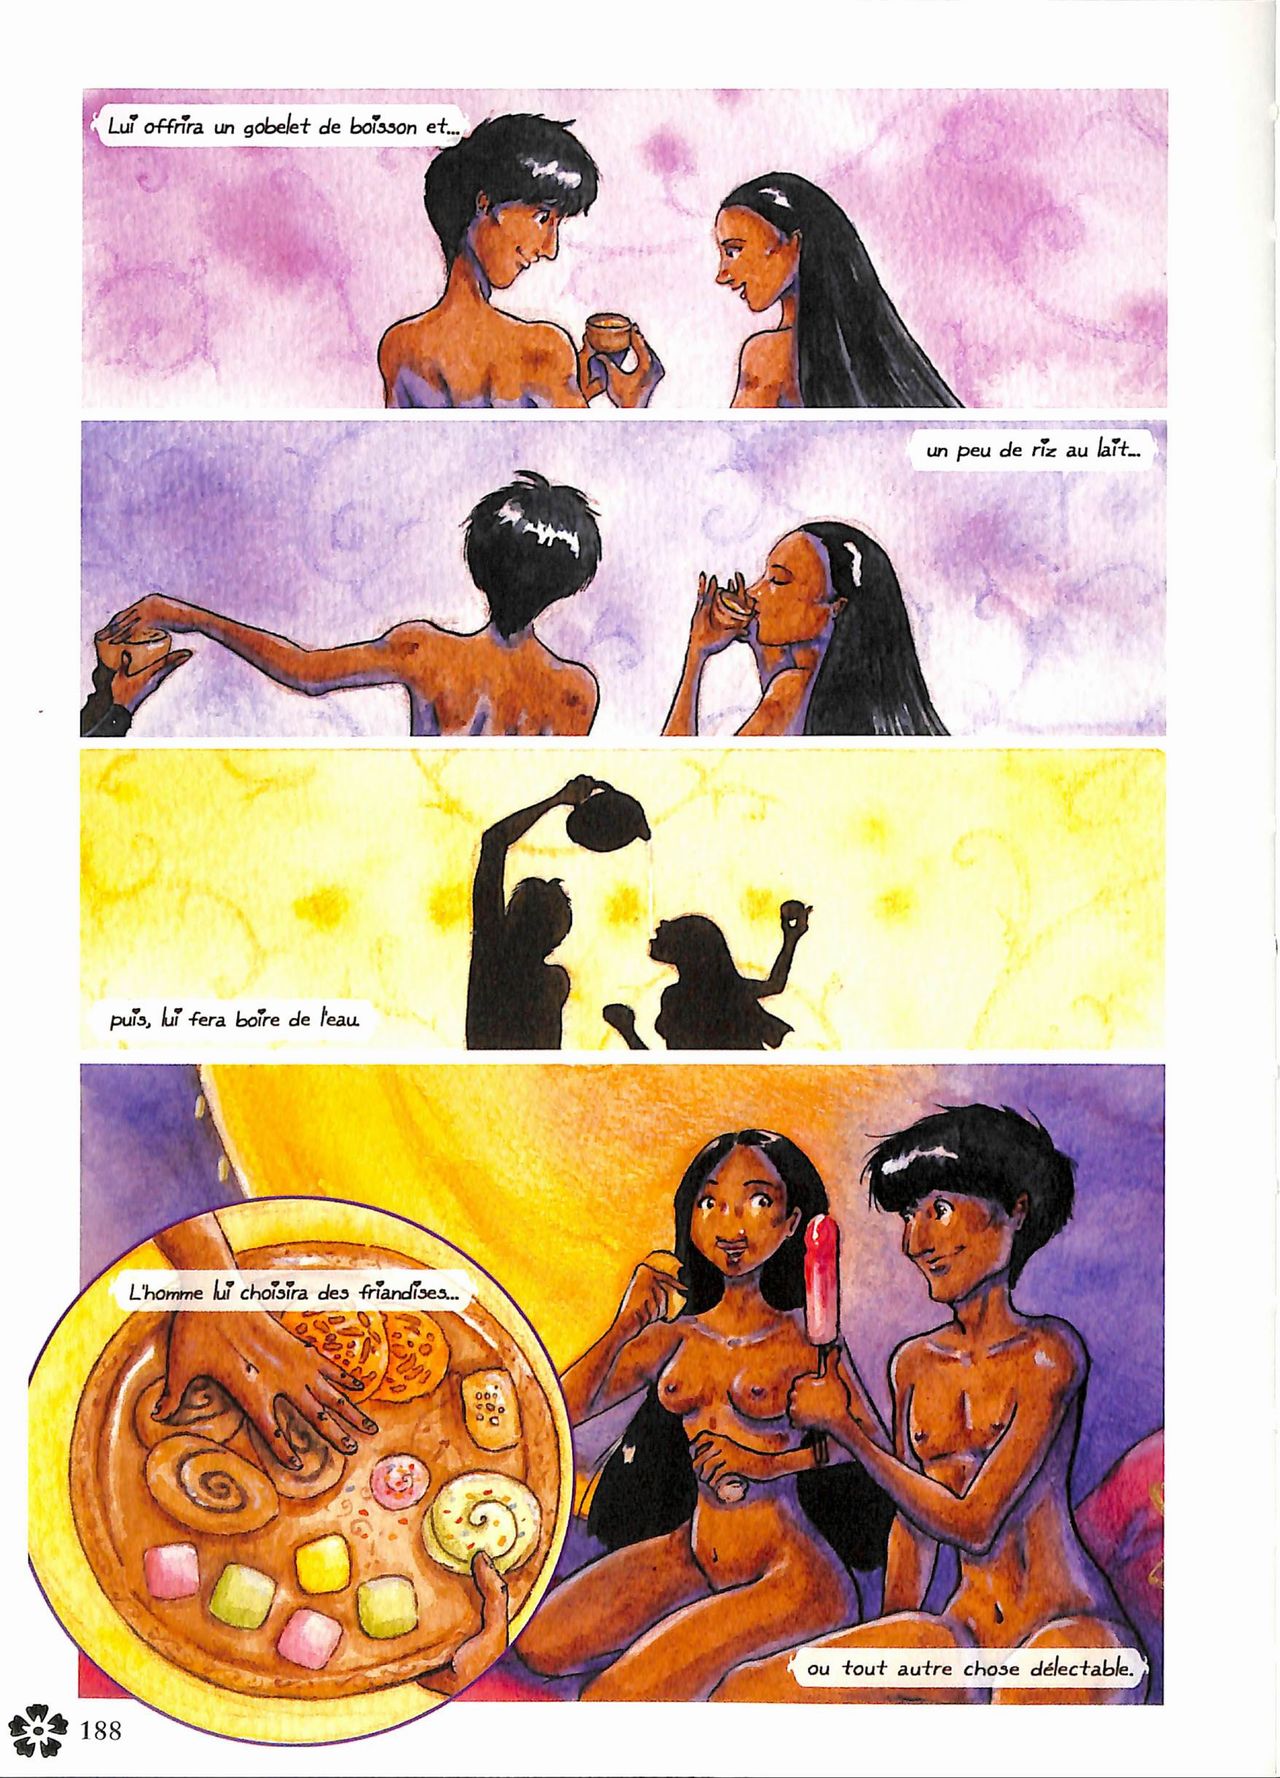 Kama Sutra en bandes dessinées - Kama Sutra with Comics numero d'image 188